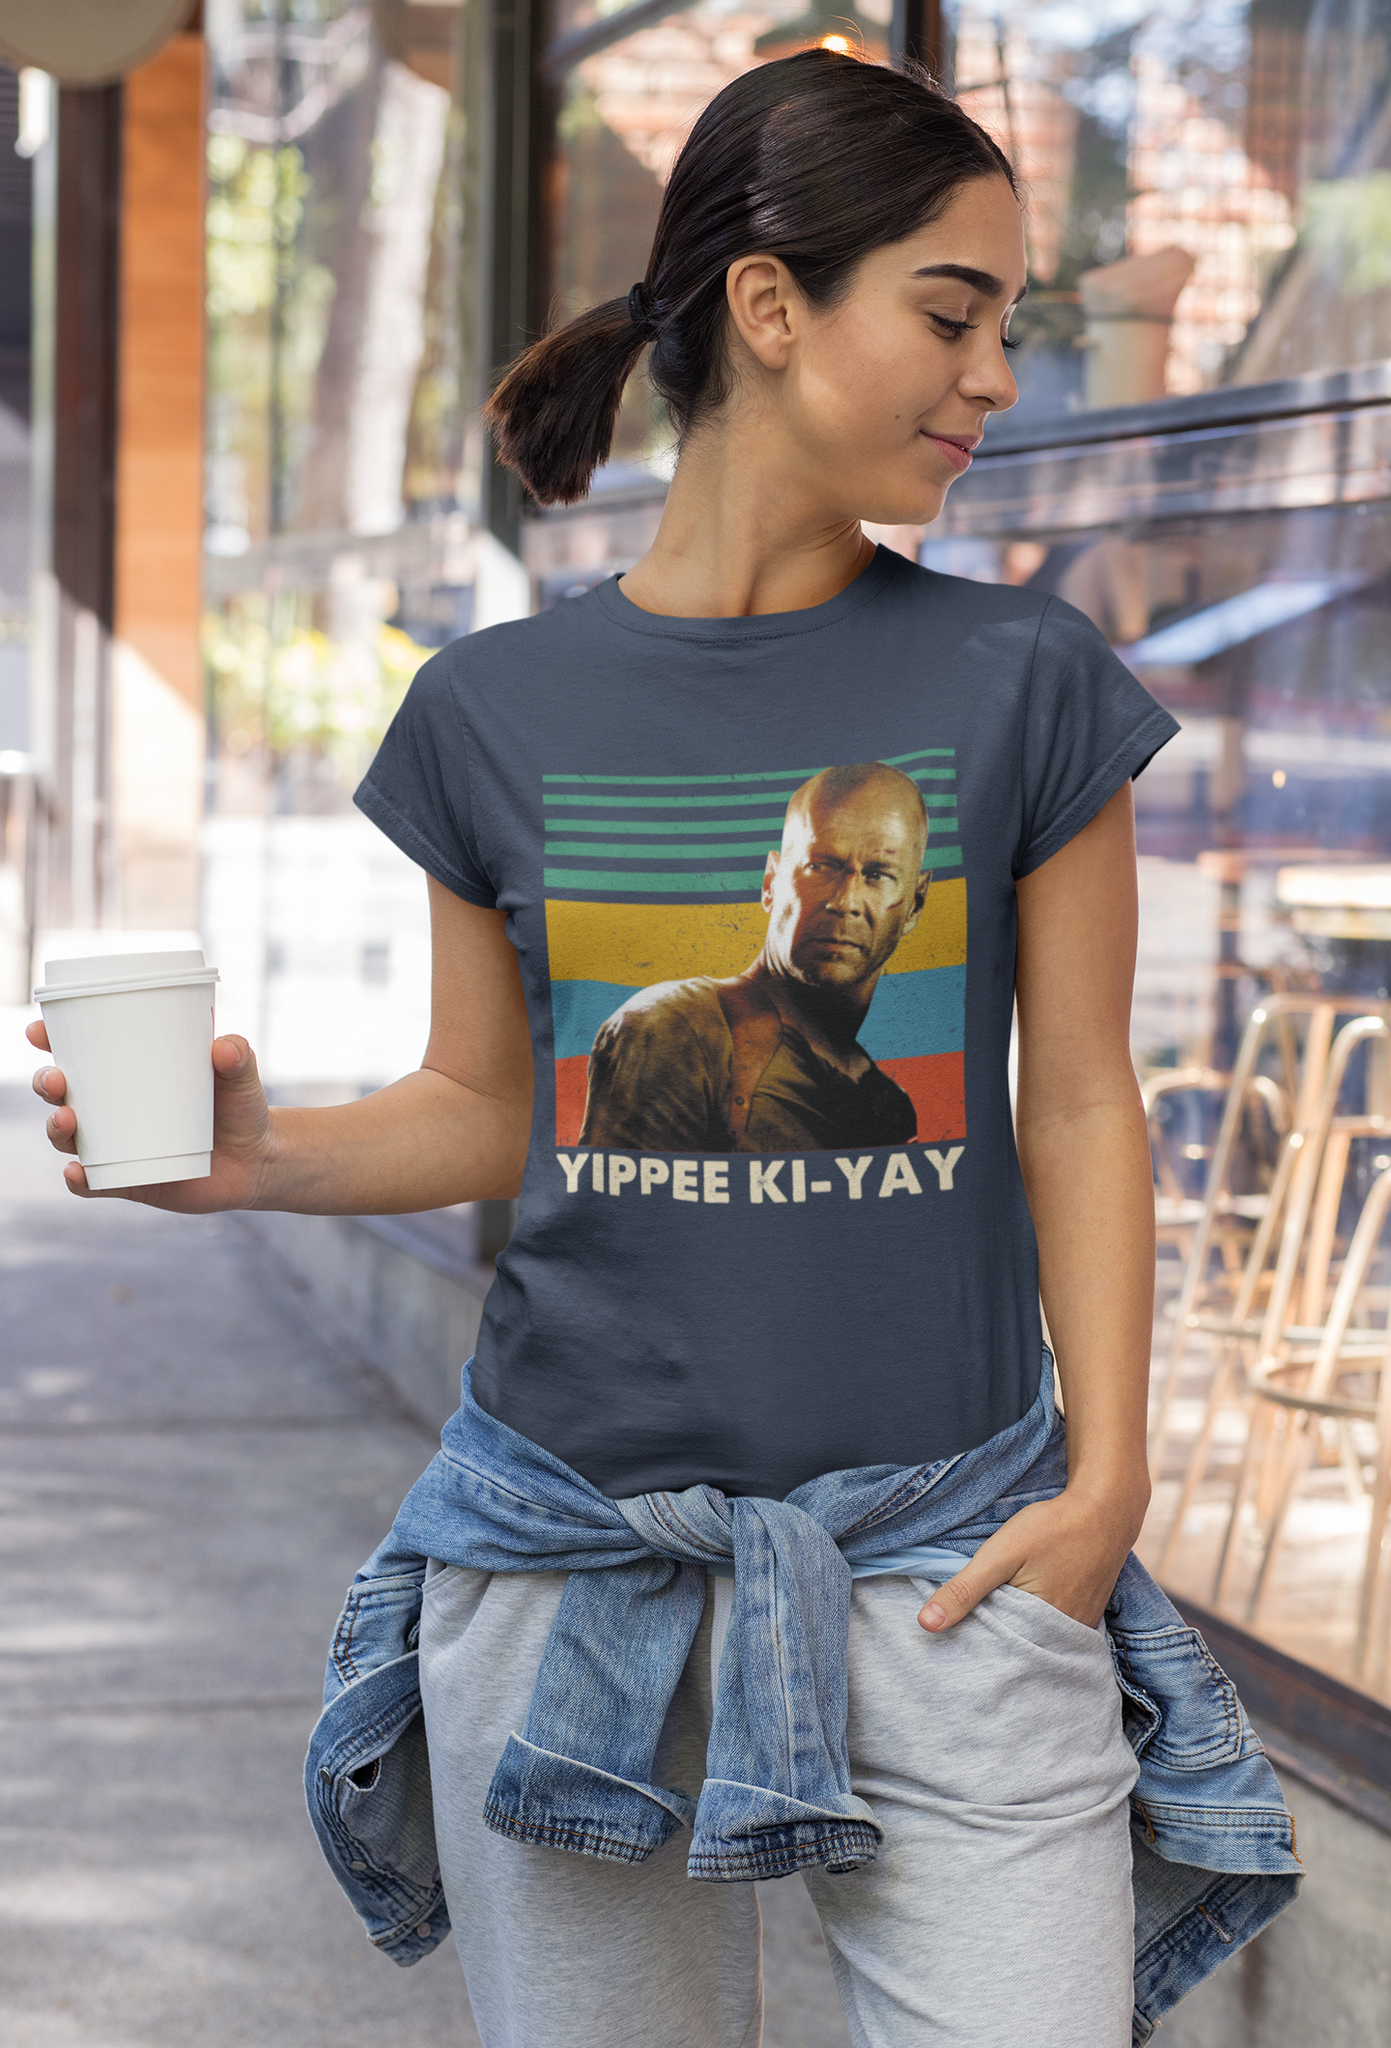 Die Hard Vintage T Shirt, John McClane T Shirt, Yippee Ki Yay Tshirt, Christmas Gifts